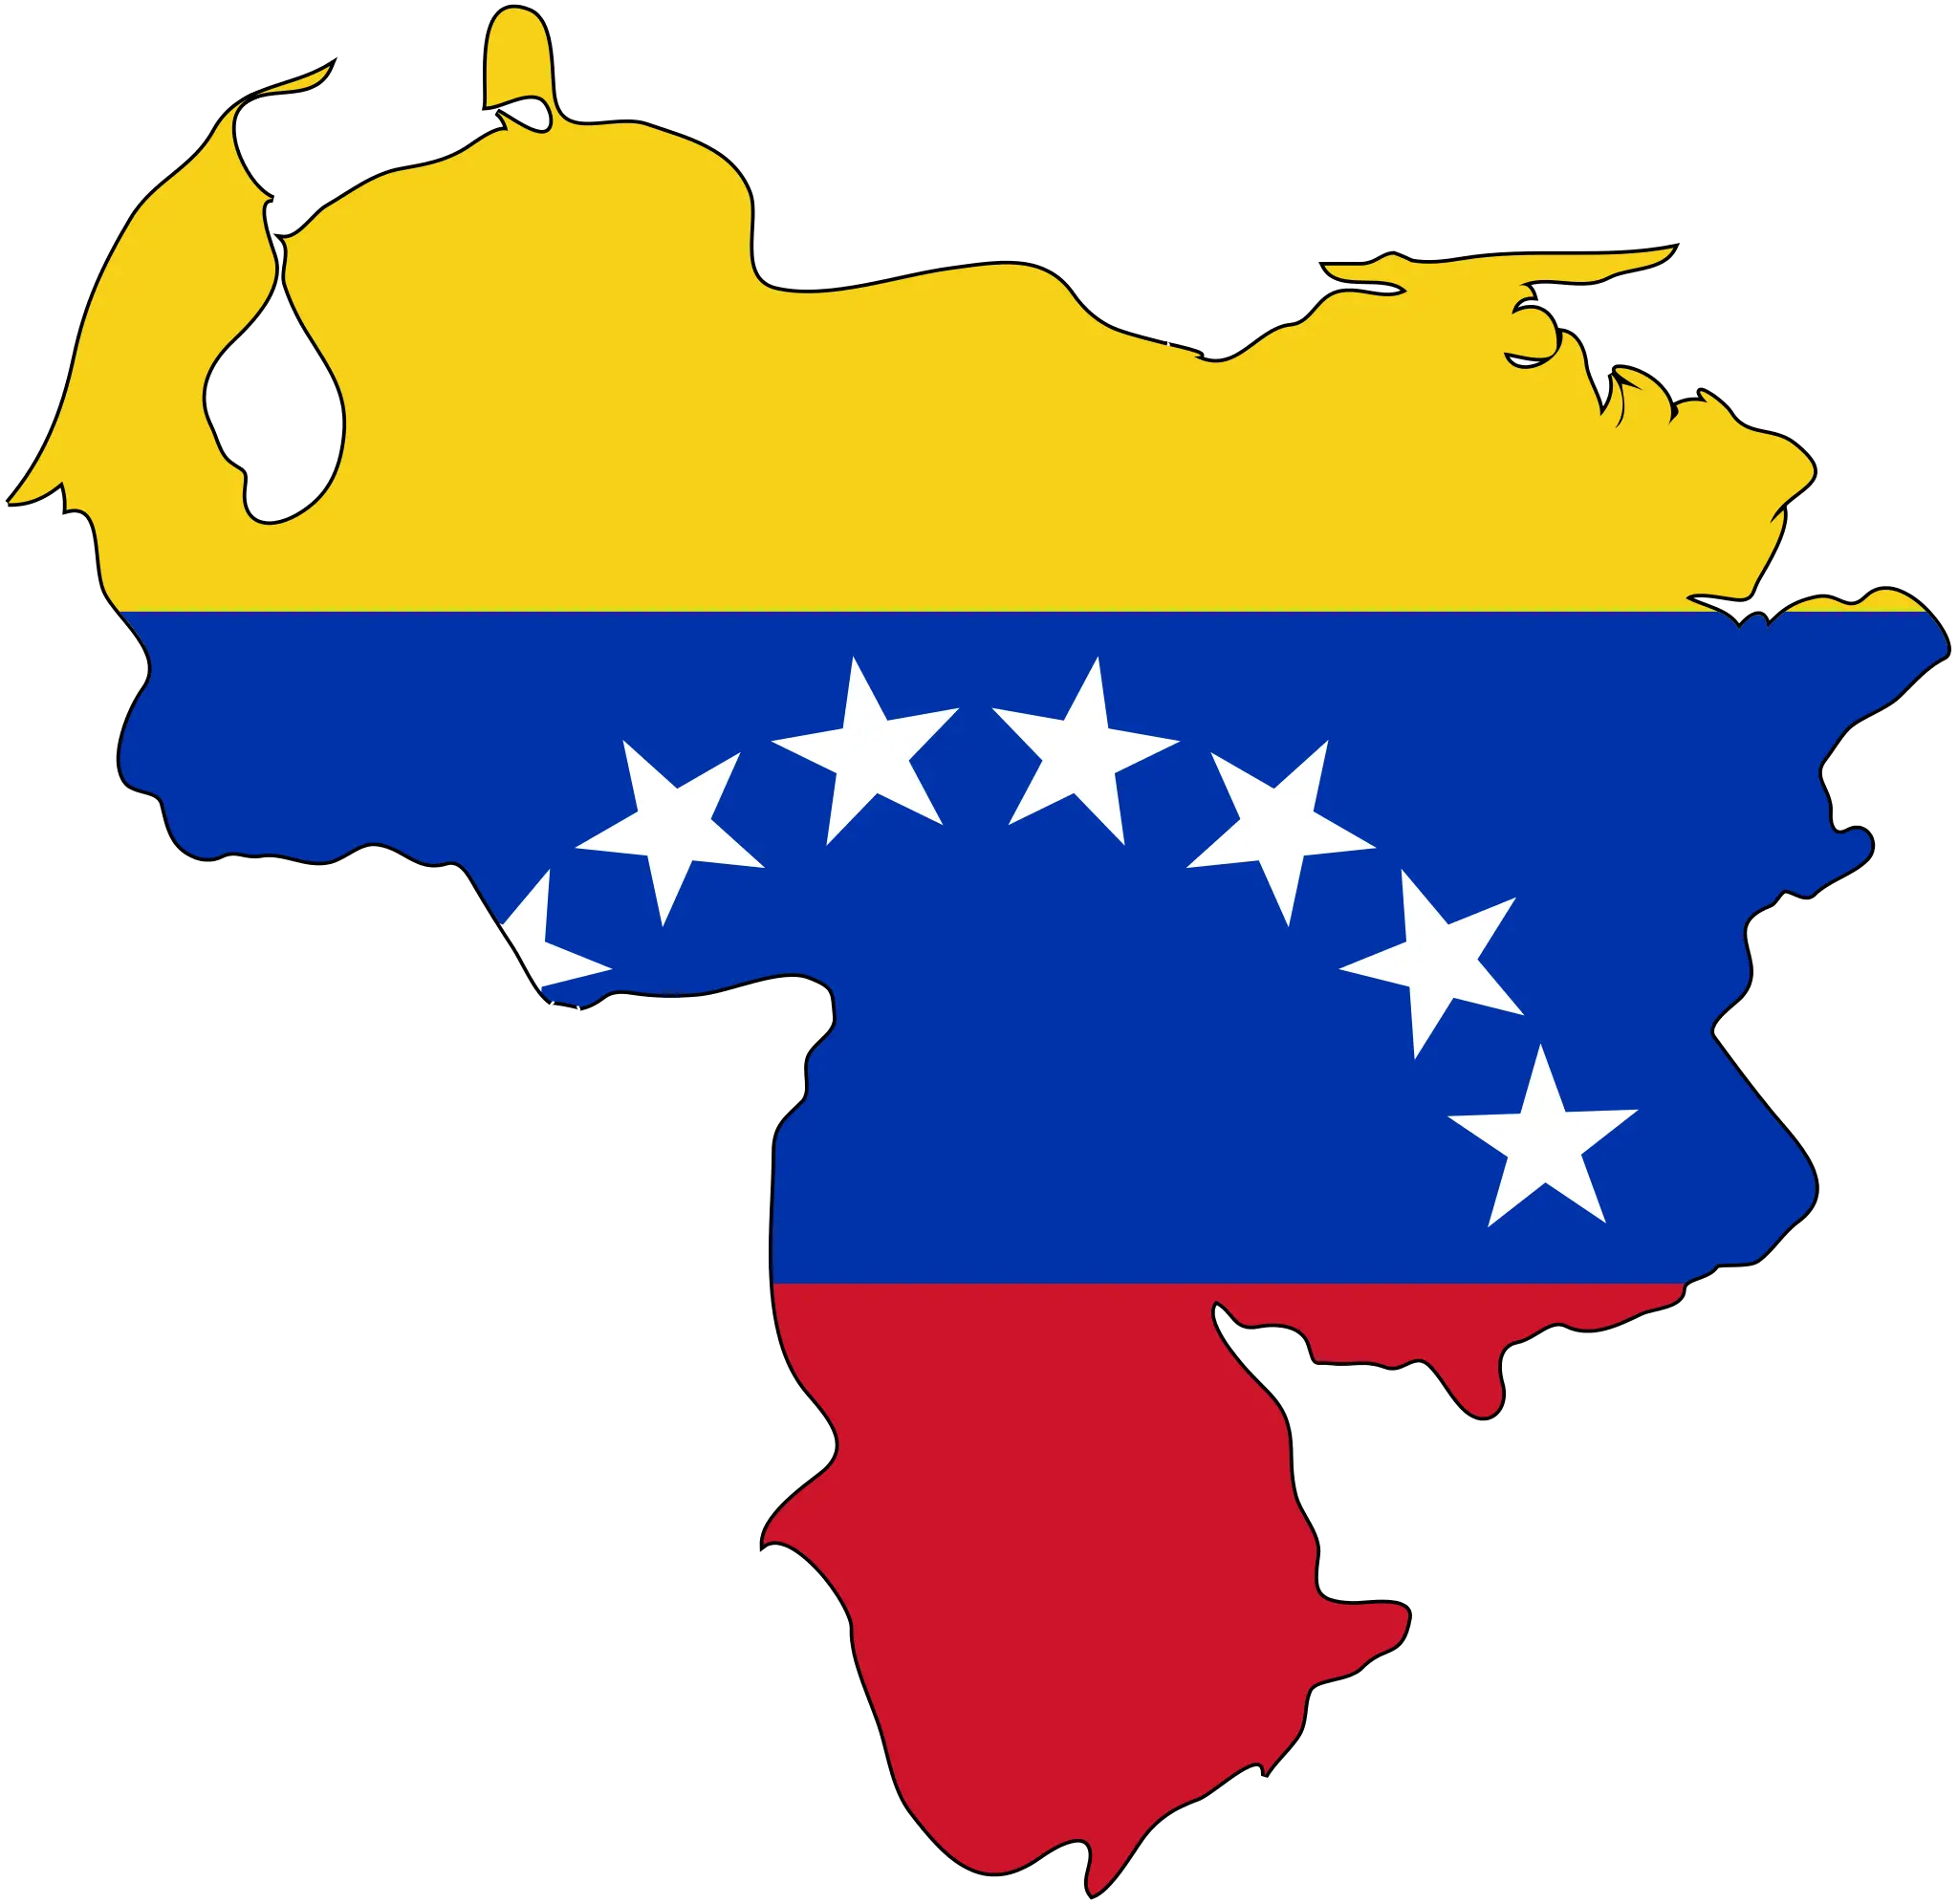 Venezuela Flag Map Mapsofnet